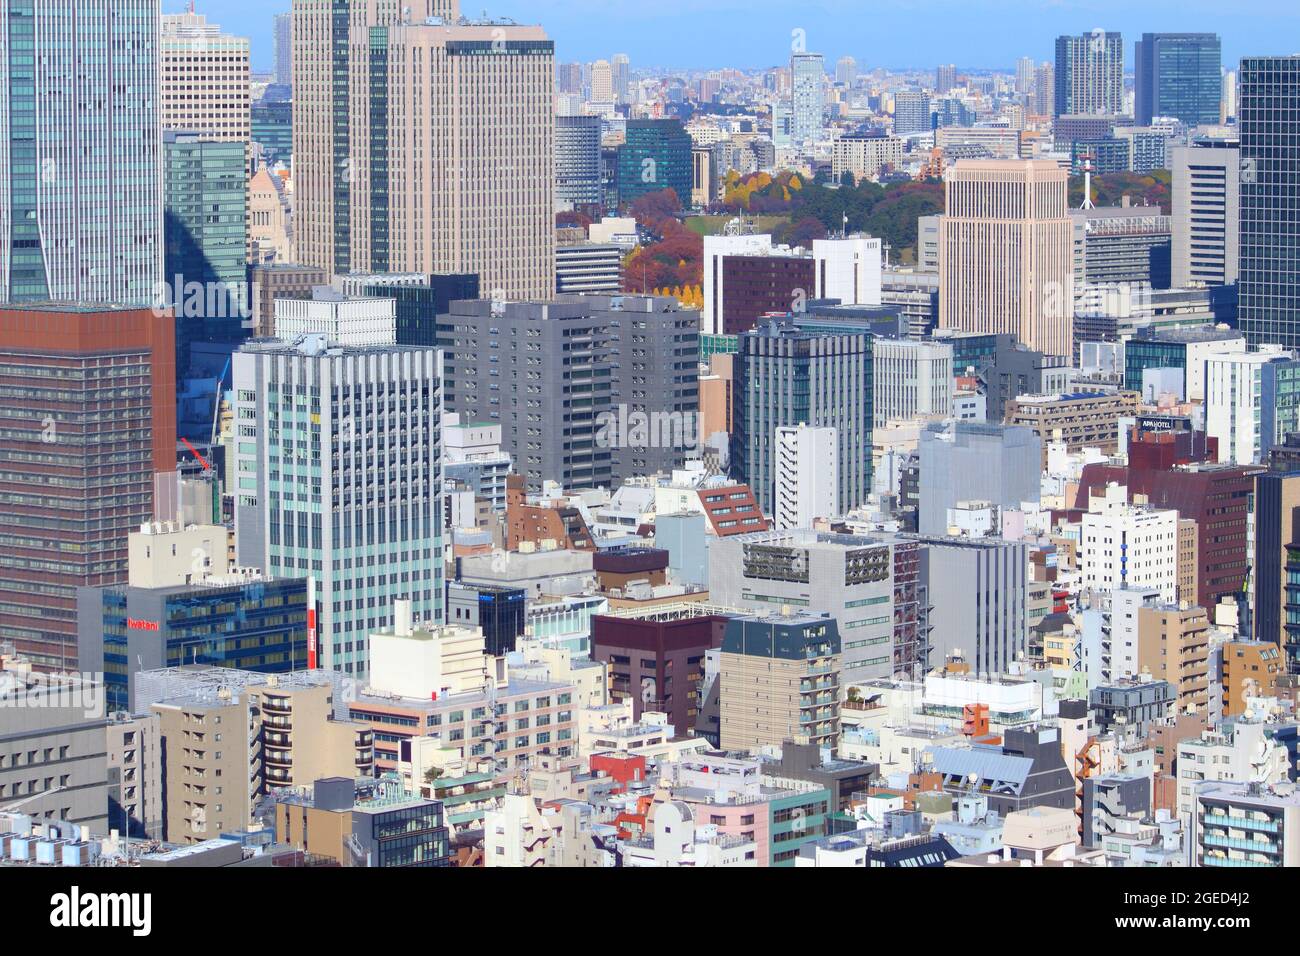 TOKYO, JAPAN - DECEMBER 2, 2016: City view of Tokyo Nishishinbashi district of Minato ward. Tokyo is the capital city of Japan. 37.8 million people li Stock Photo